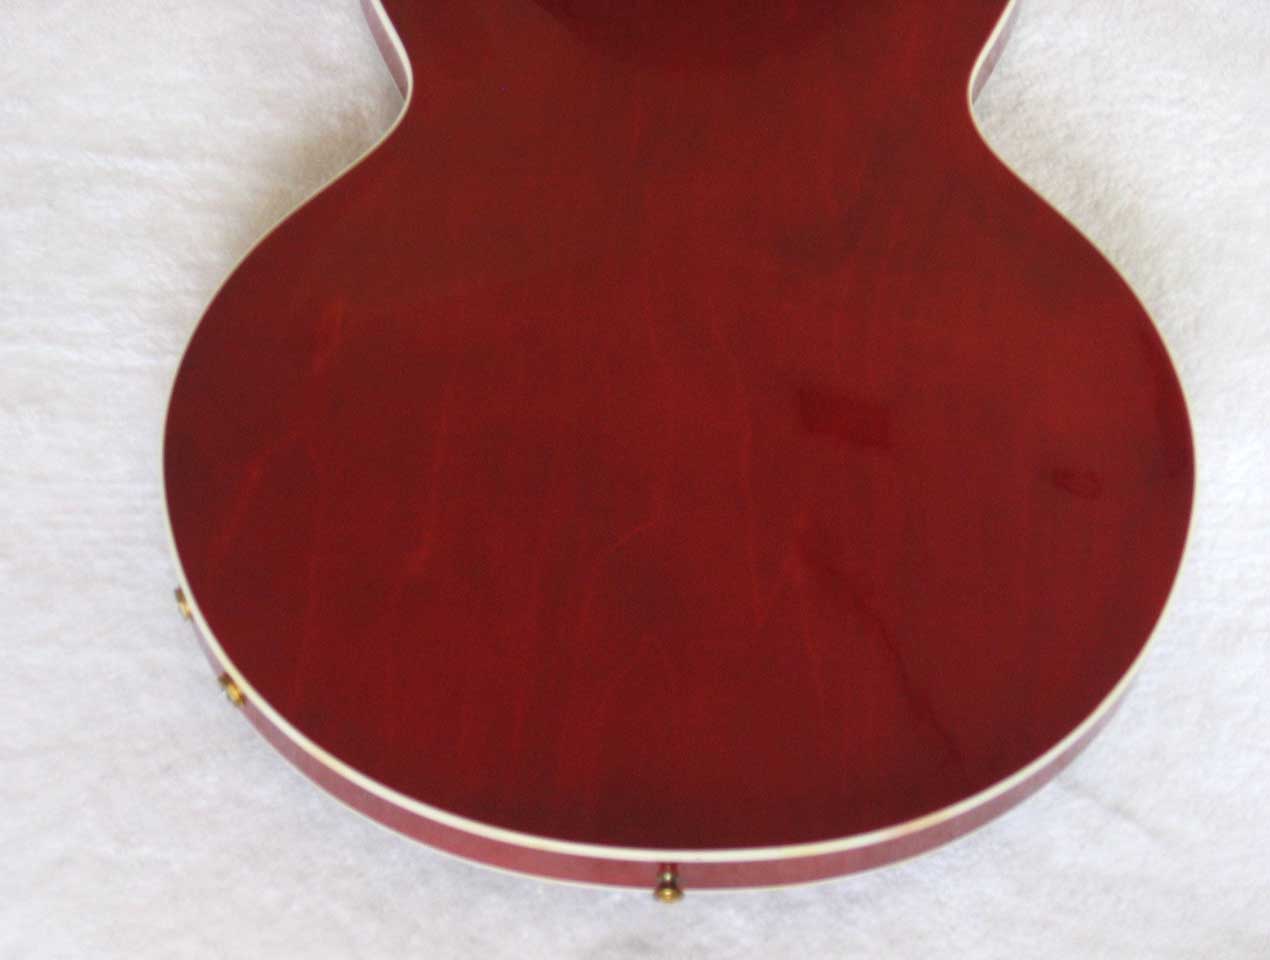 2008 Gibson Custom Shop ES-346 Cherry Red Guitar